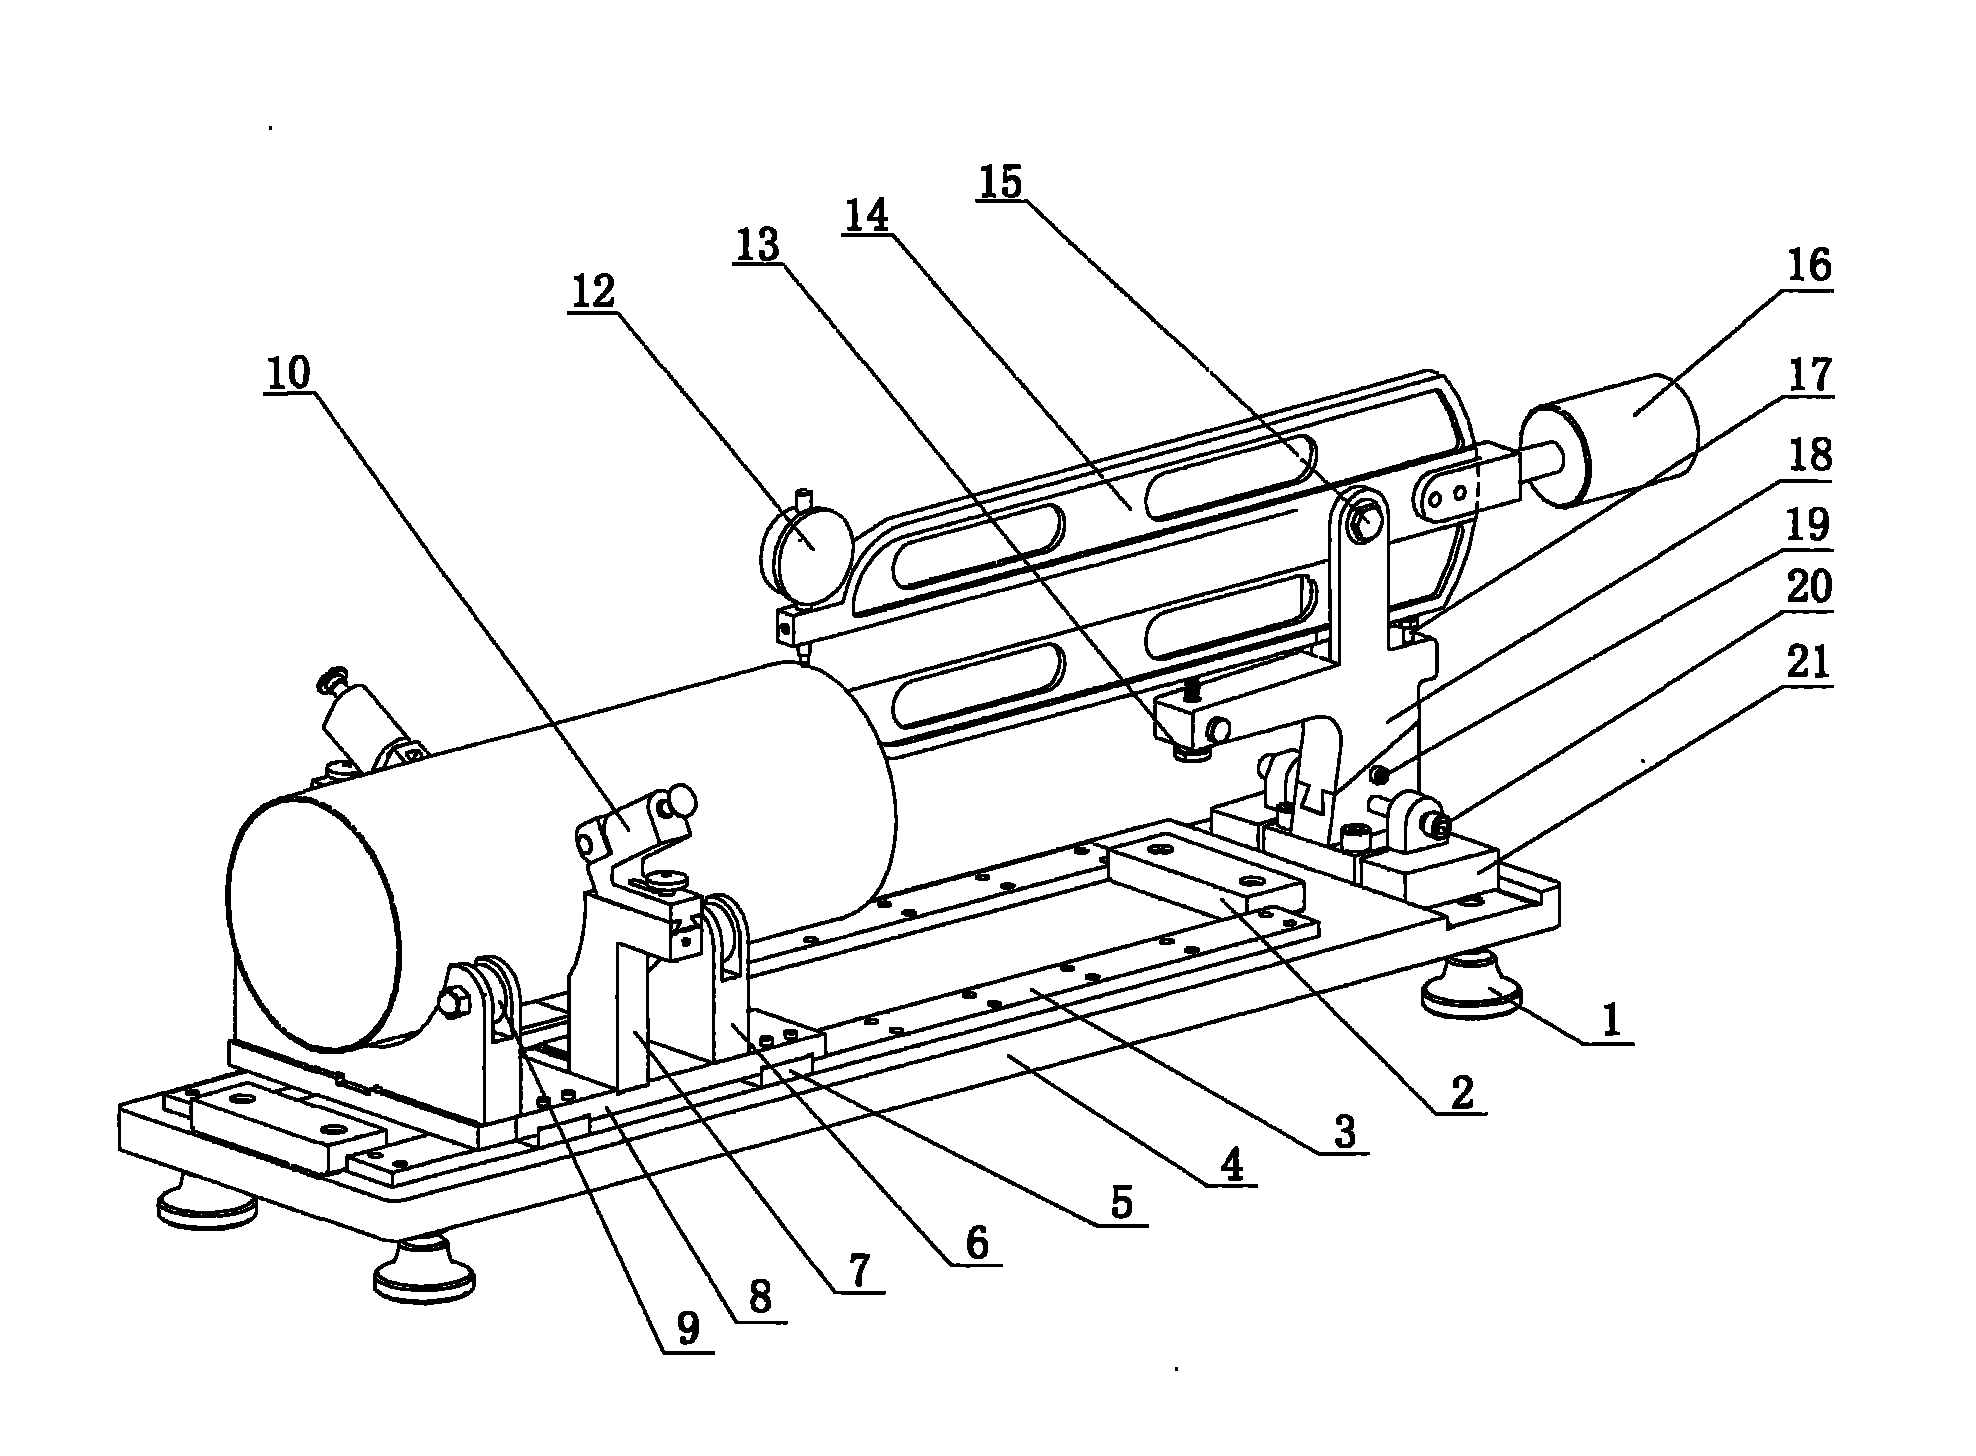 Mechanical portable measuring instrument